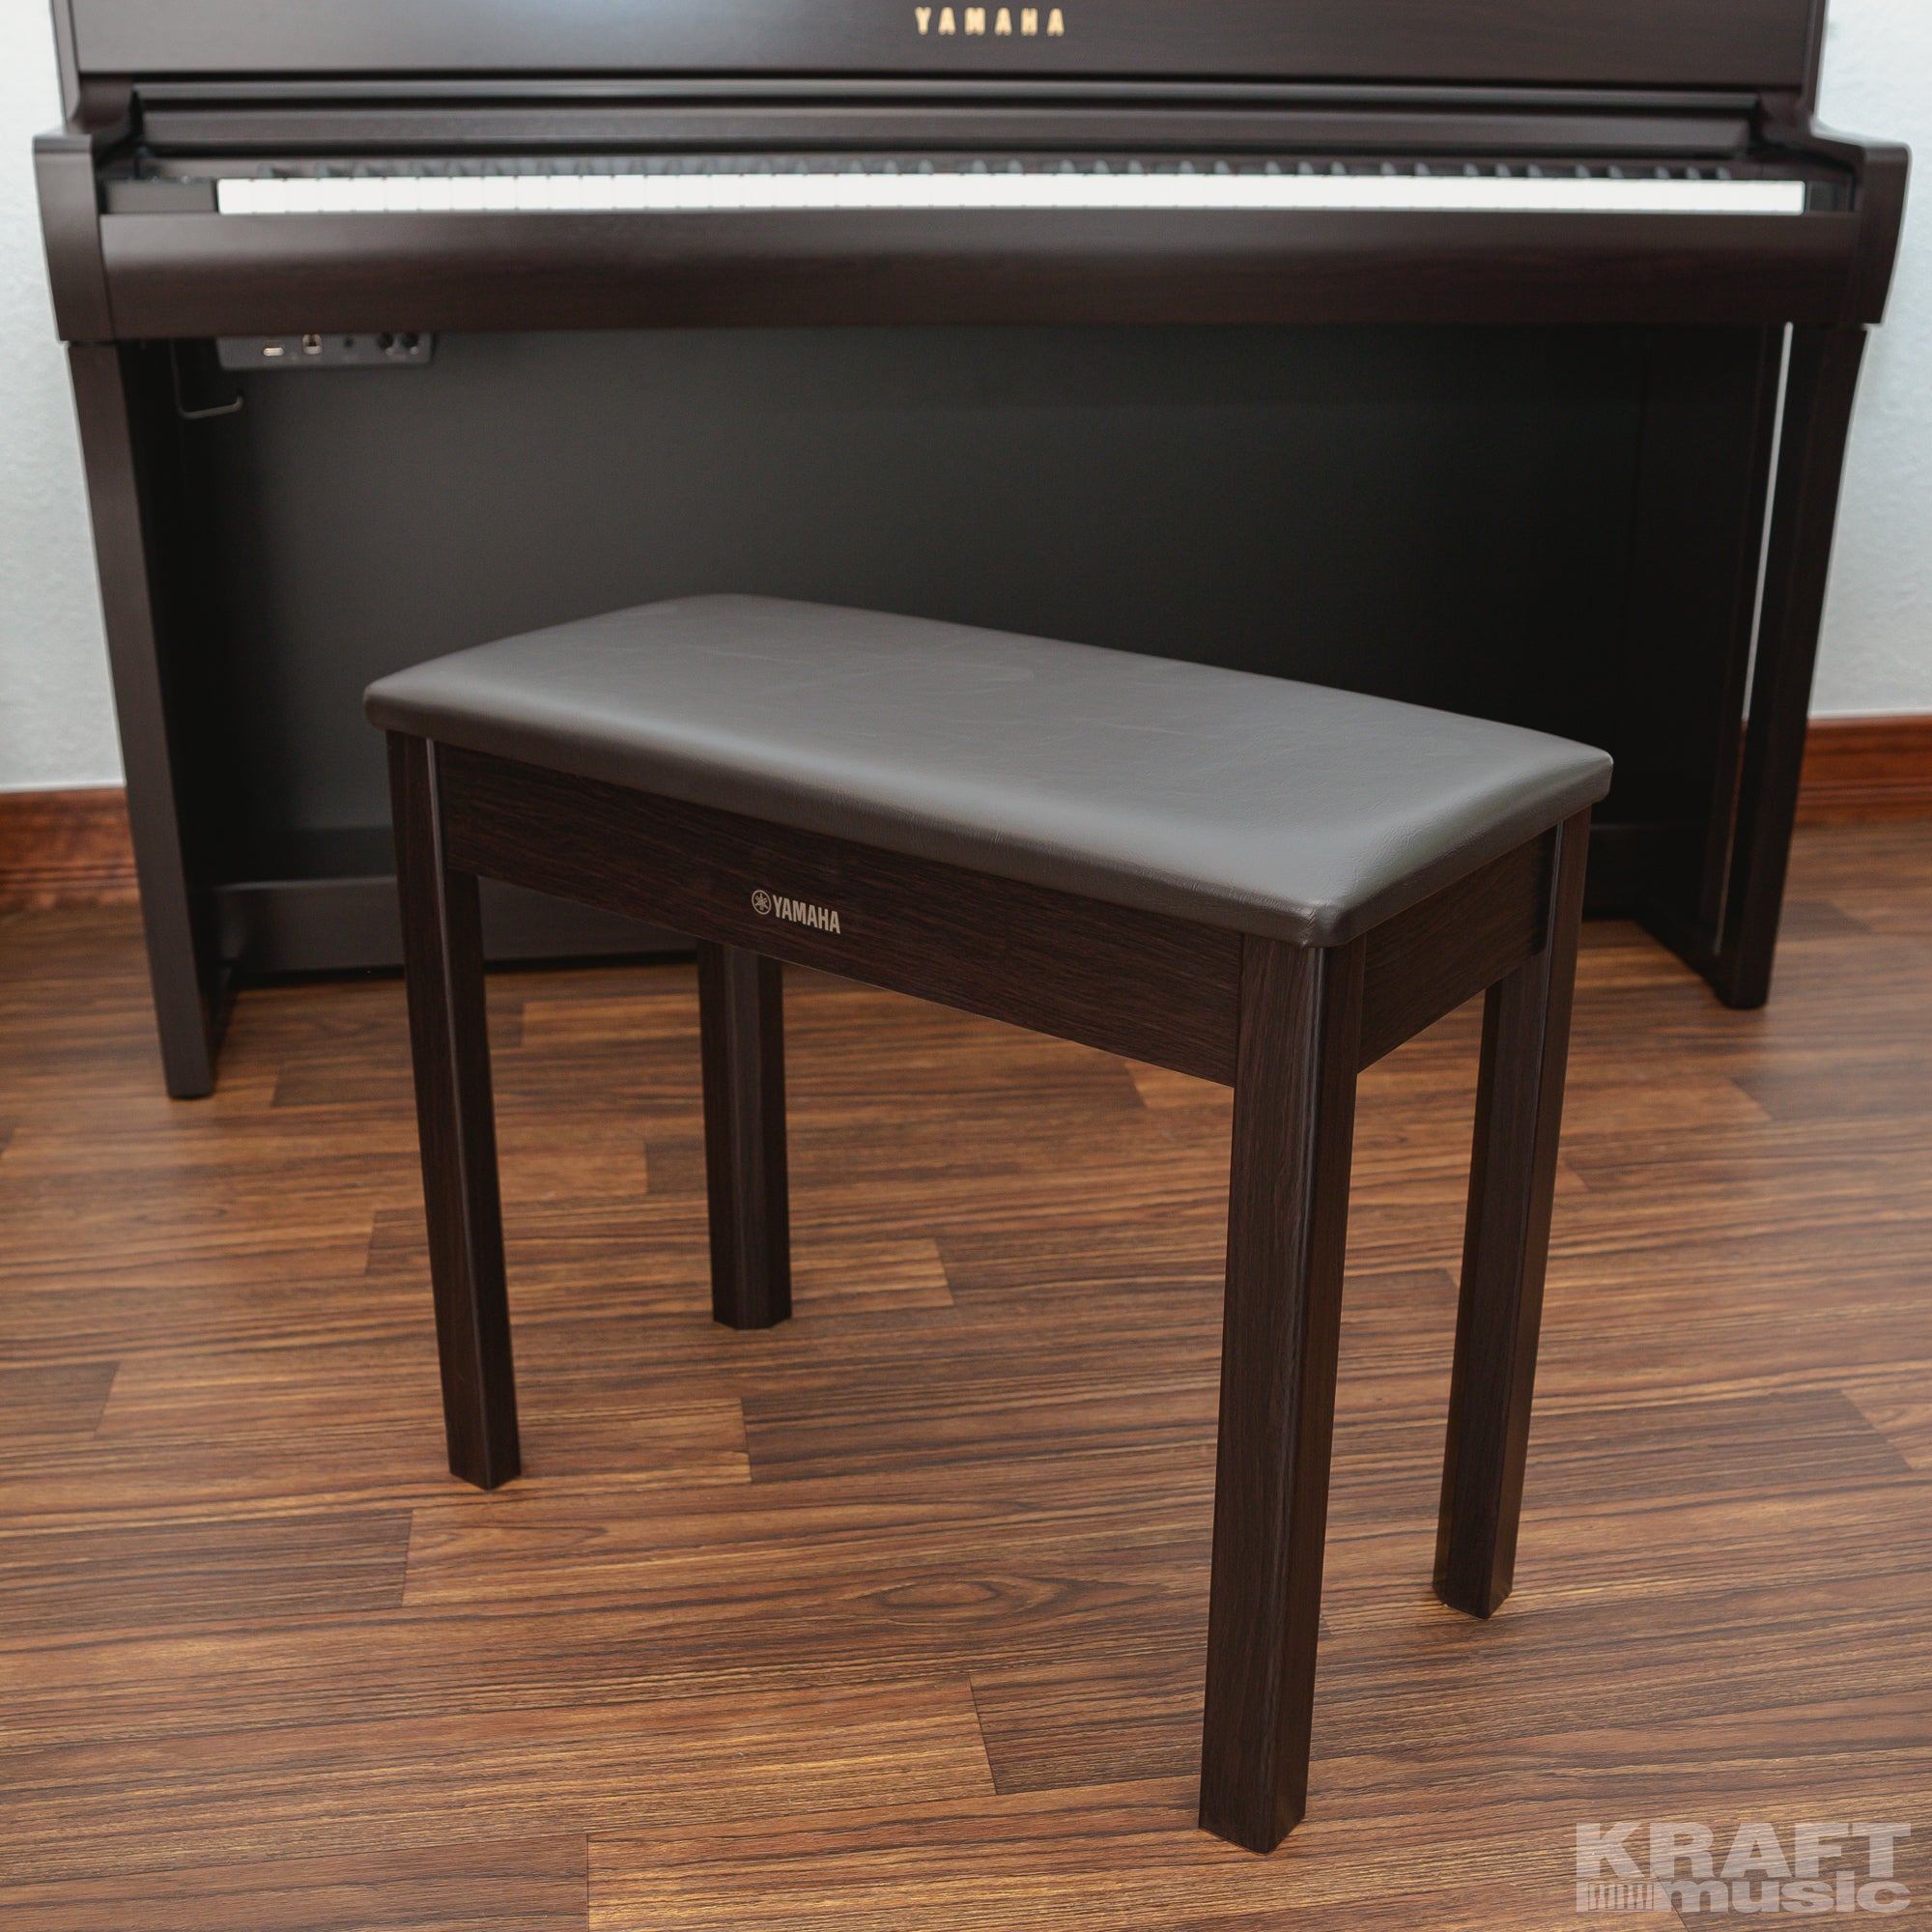 Yamaha Clavinova CLP-735 Digital Piano - Rosewood - bench